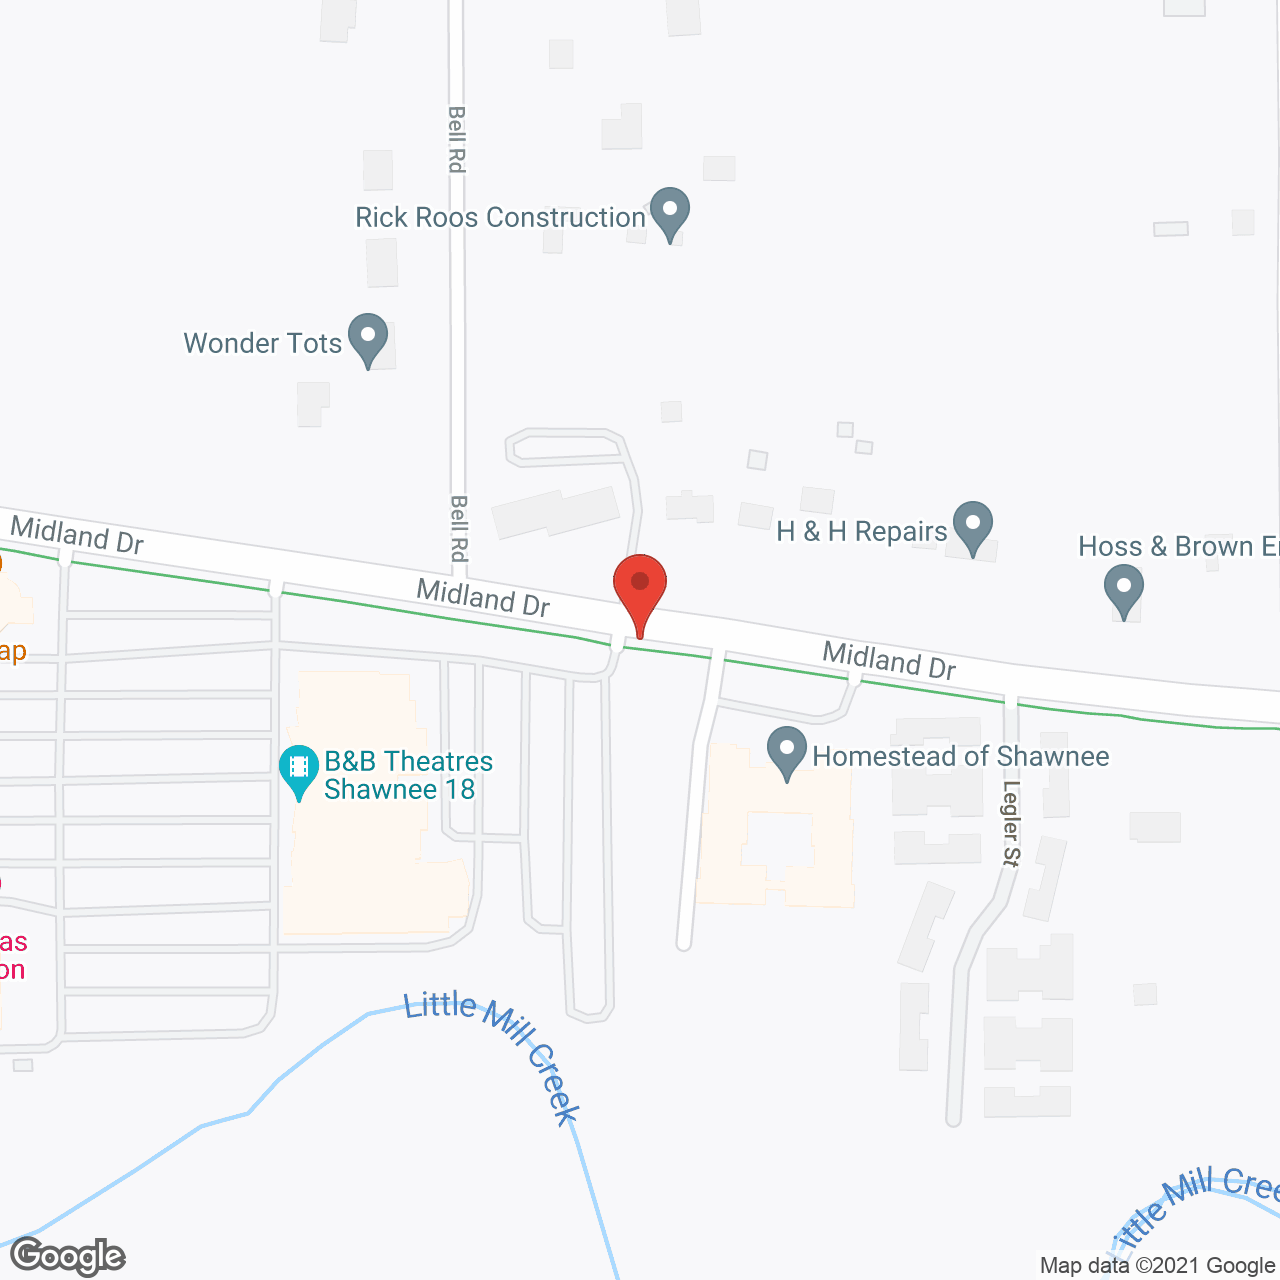 Homestead of Shawnee in google map